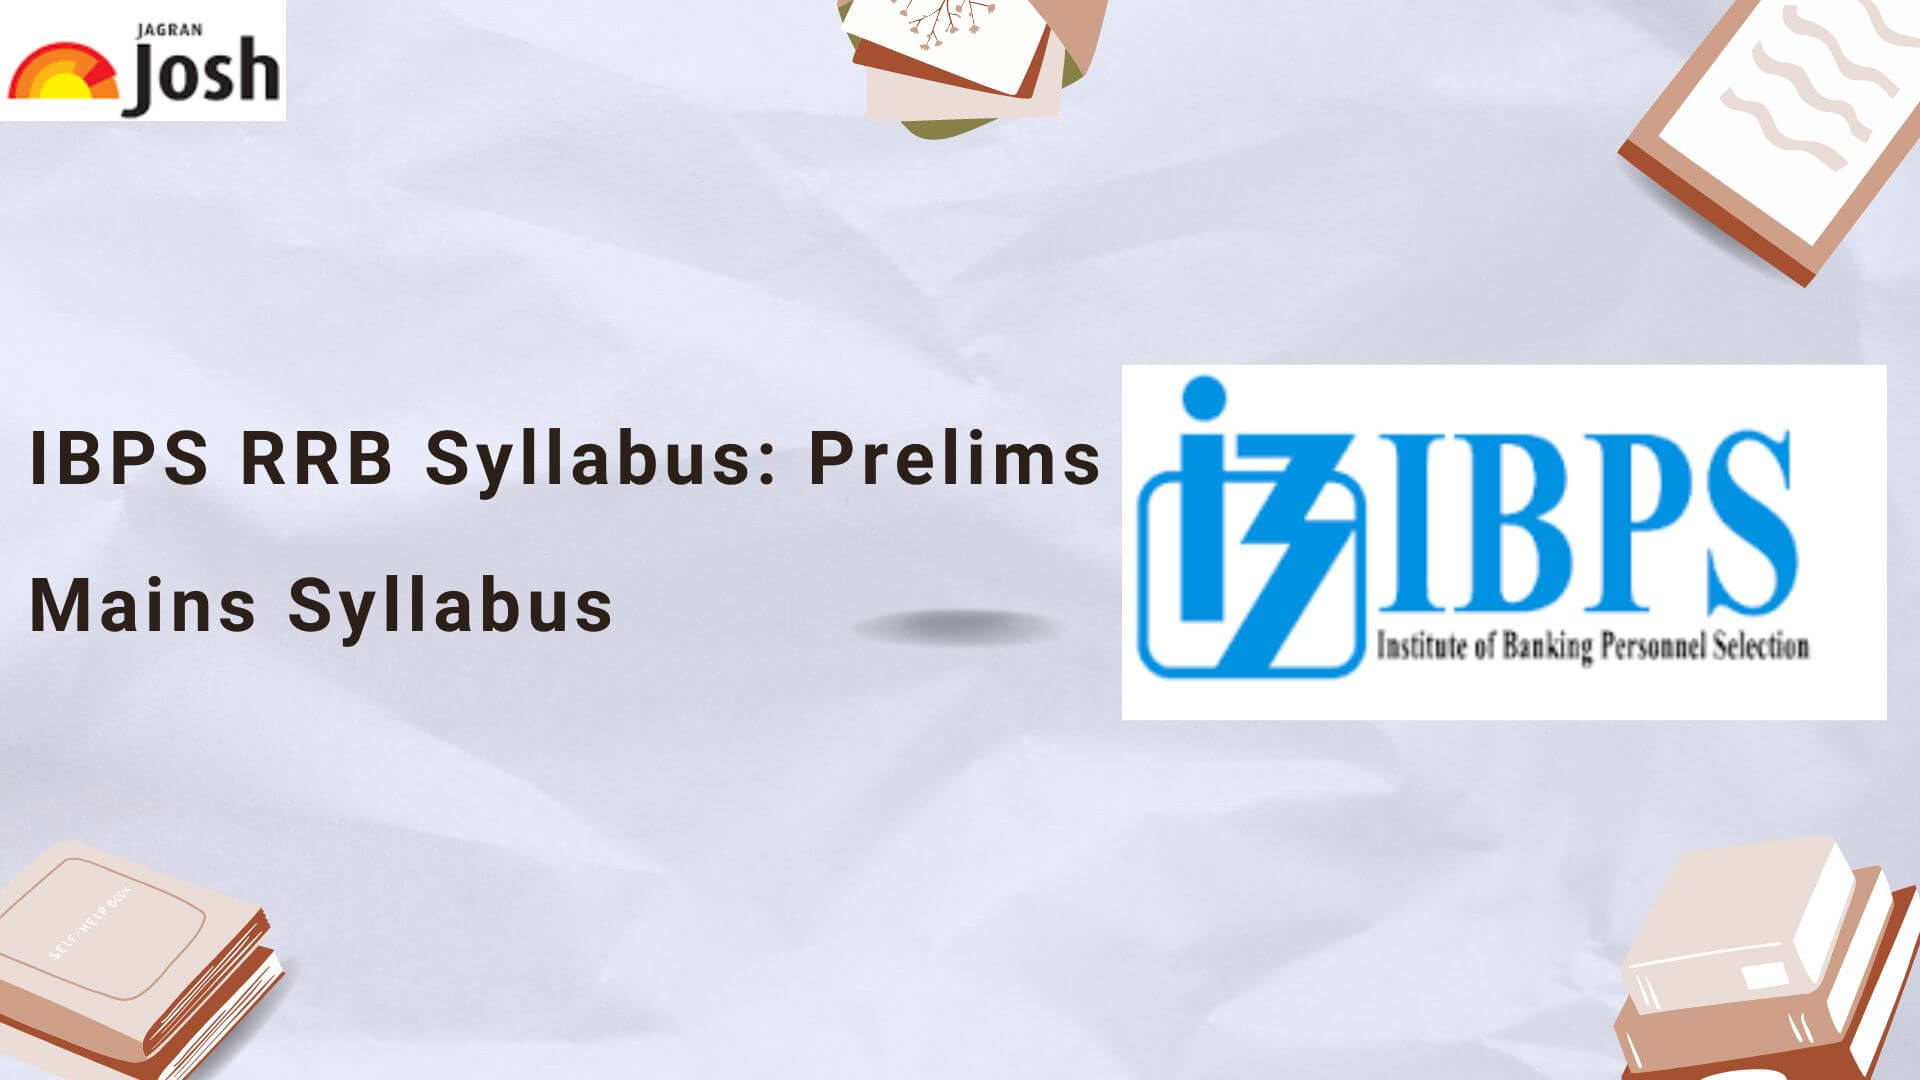 ibps-rrb-syllabus-and-exam-pattern-2023-ibps-rrb-po-clerk-prelims-mains-syllabus-jagran-josh